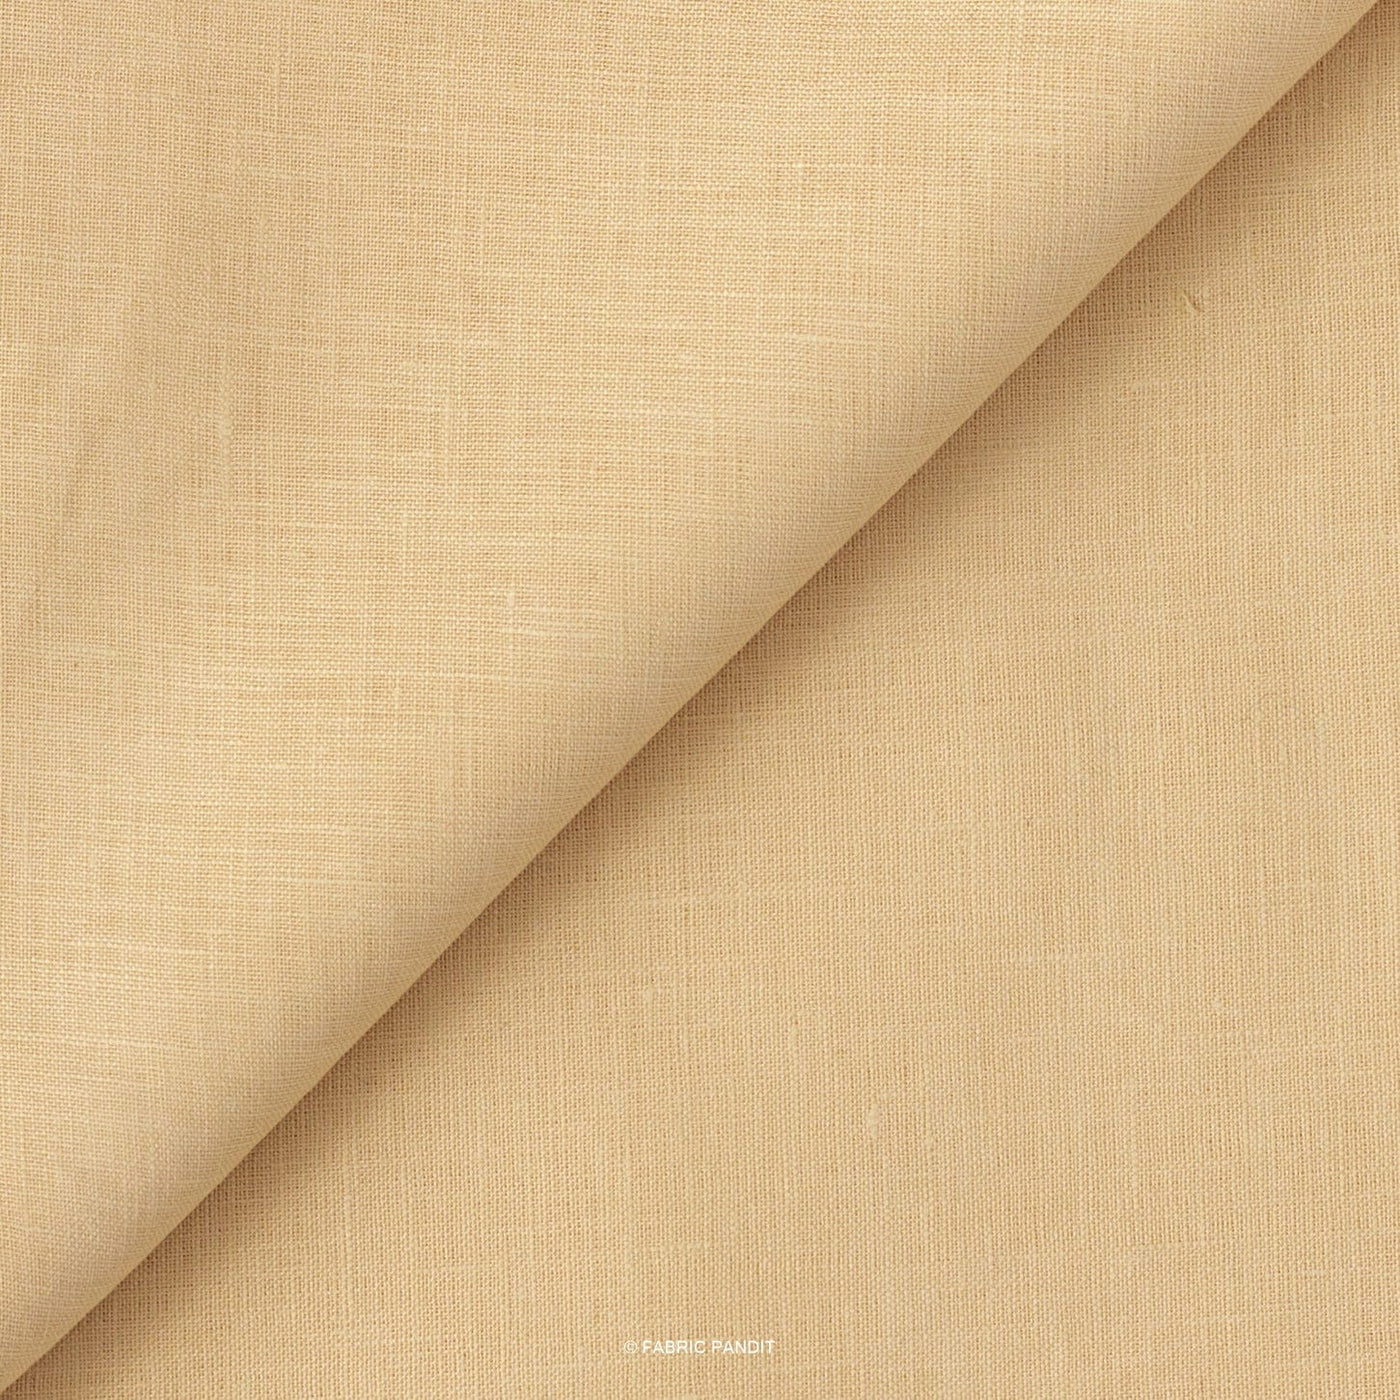 Fabric Pandit Fabric Khaki Plain Premium 60 Lea Pure Linen Fabric (Width 58 inch)